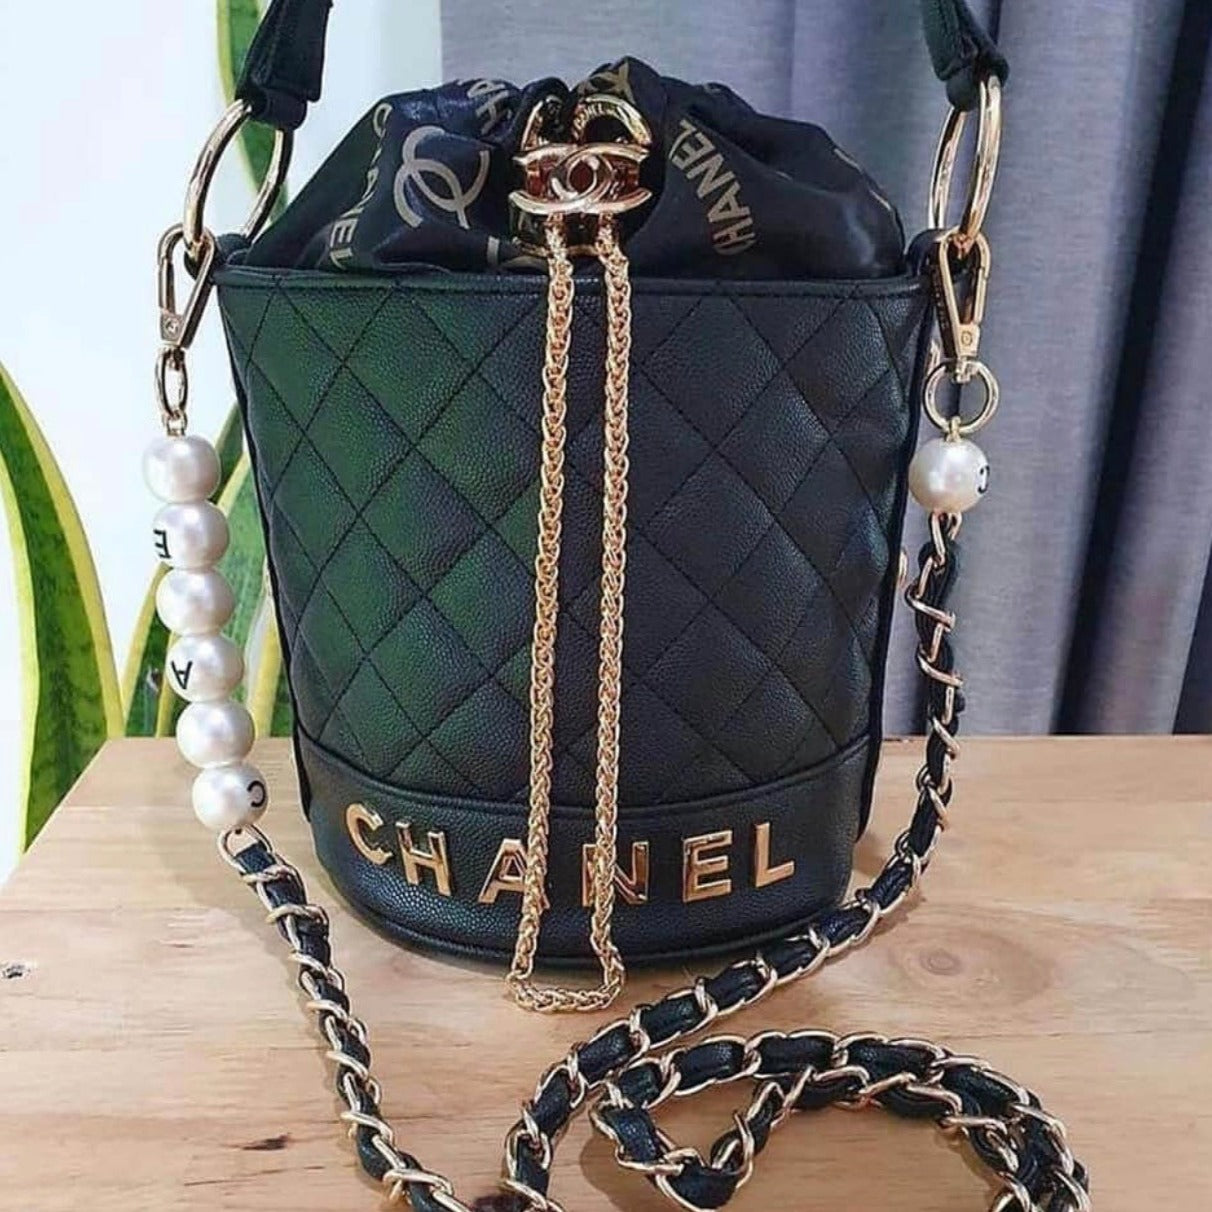 Fashion Concierge Vip Chanel, Bucket bag, PINK